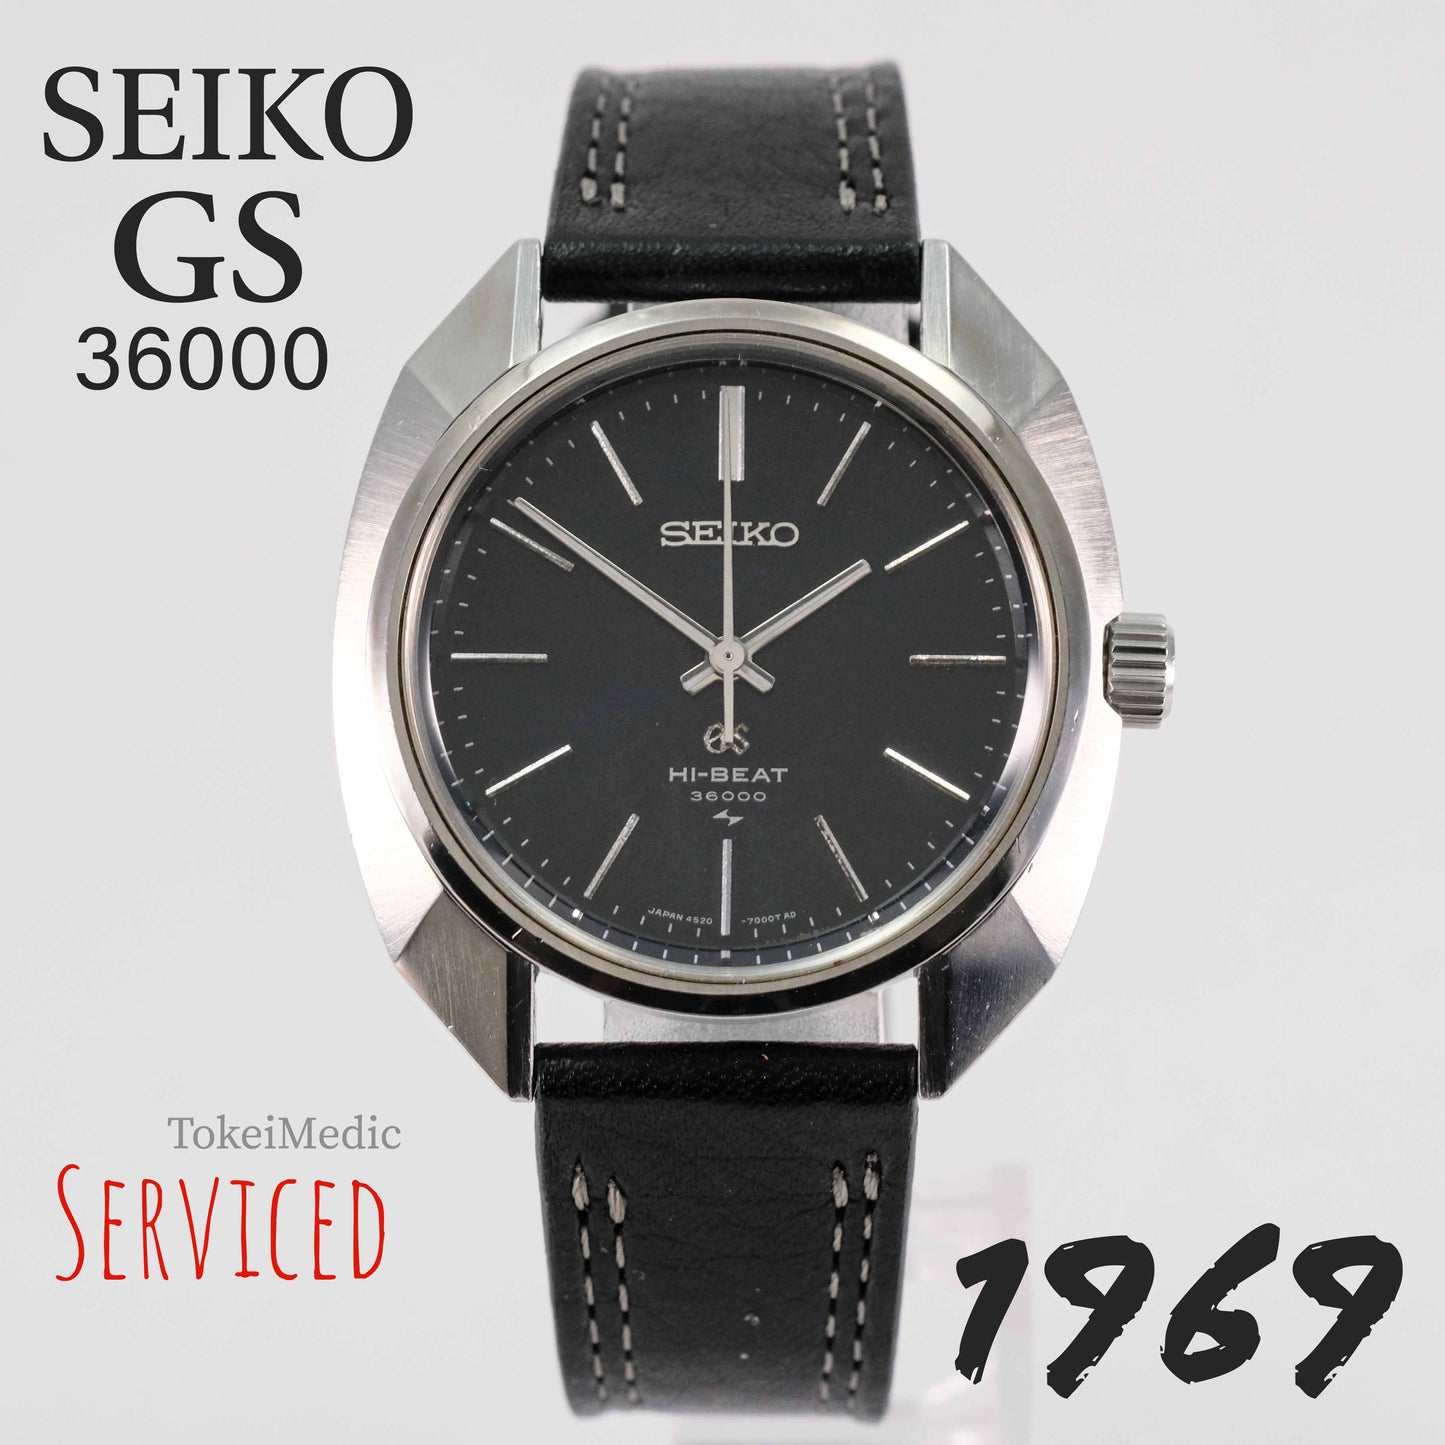 1969 Seiko GS 4520-7000